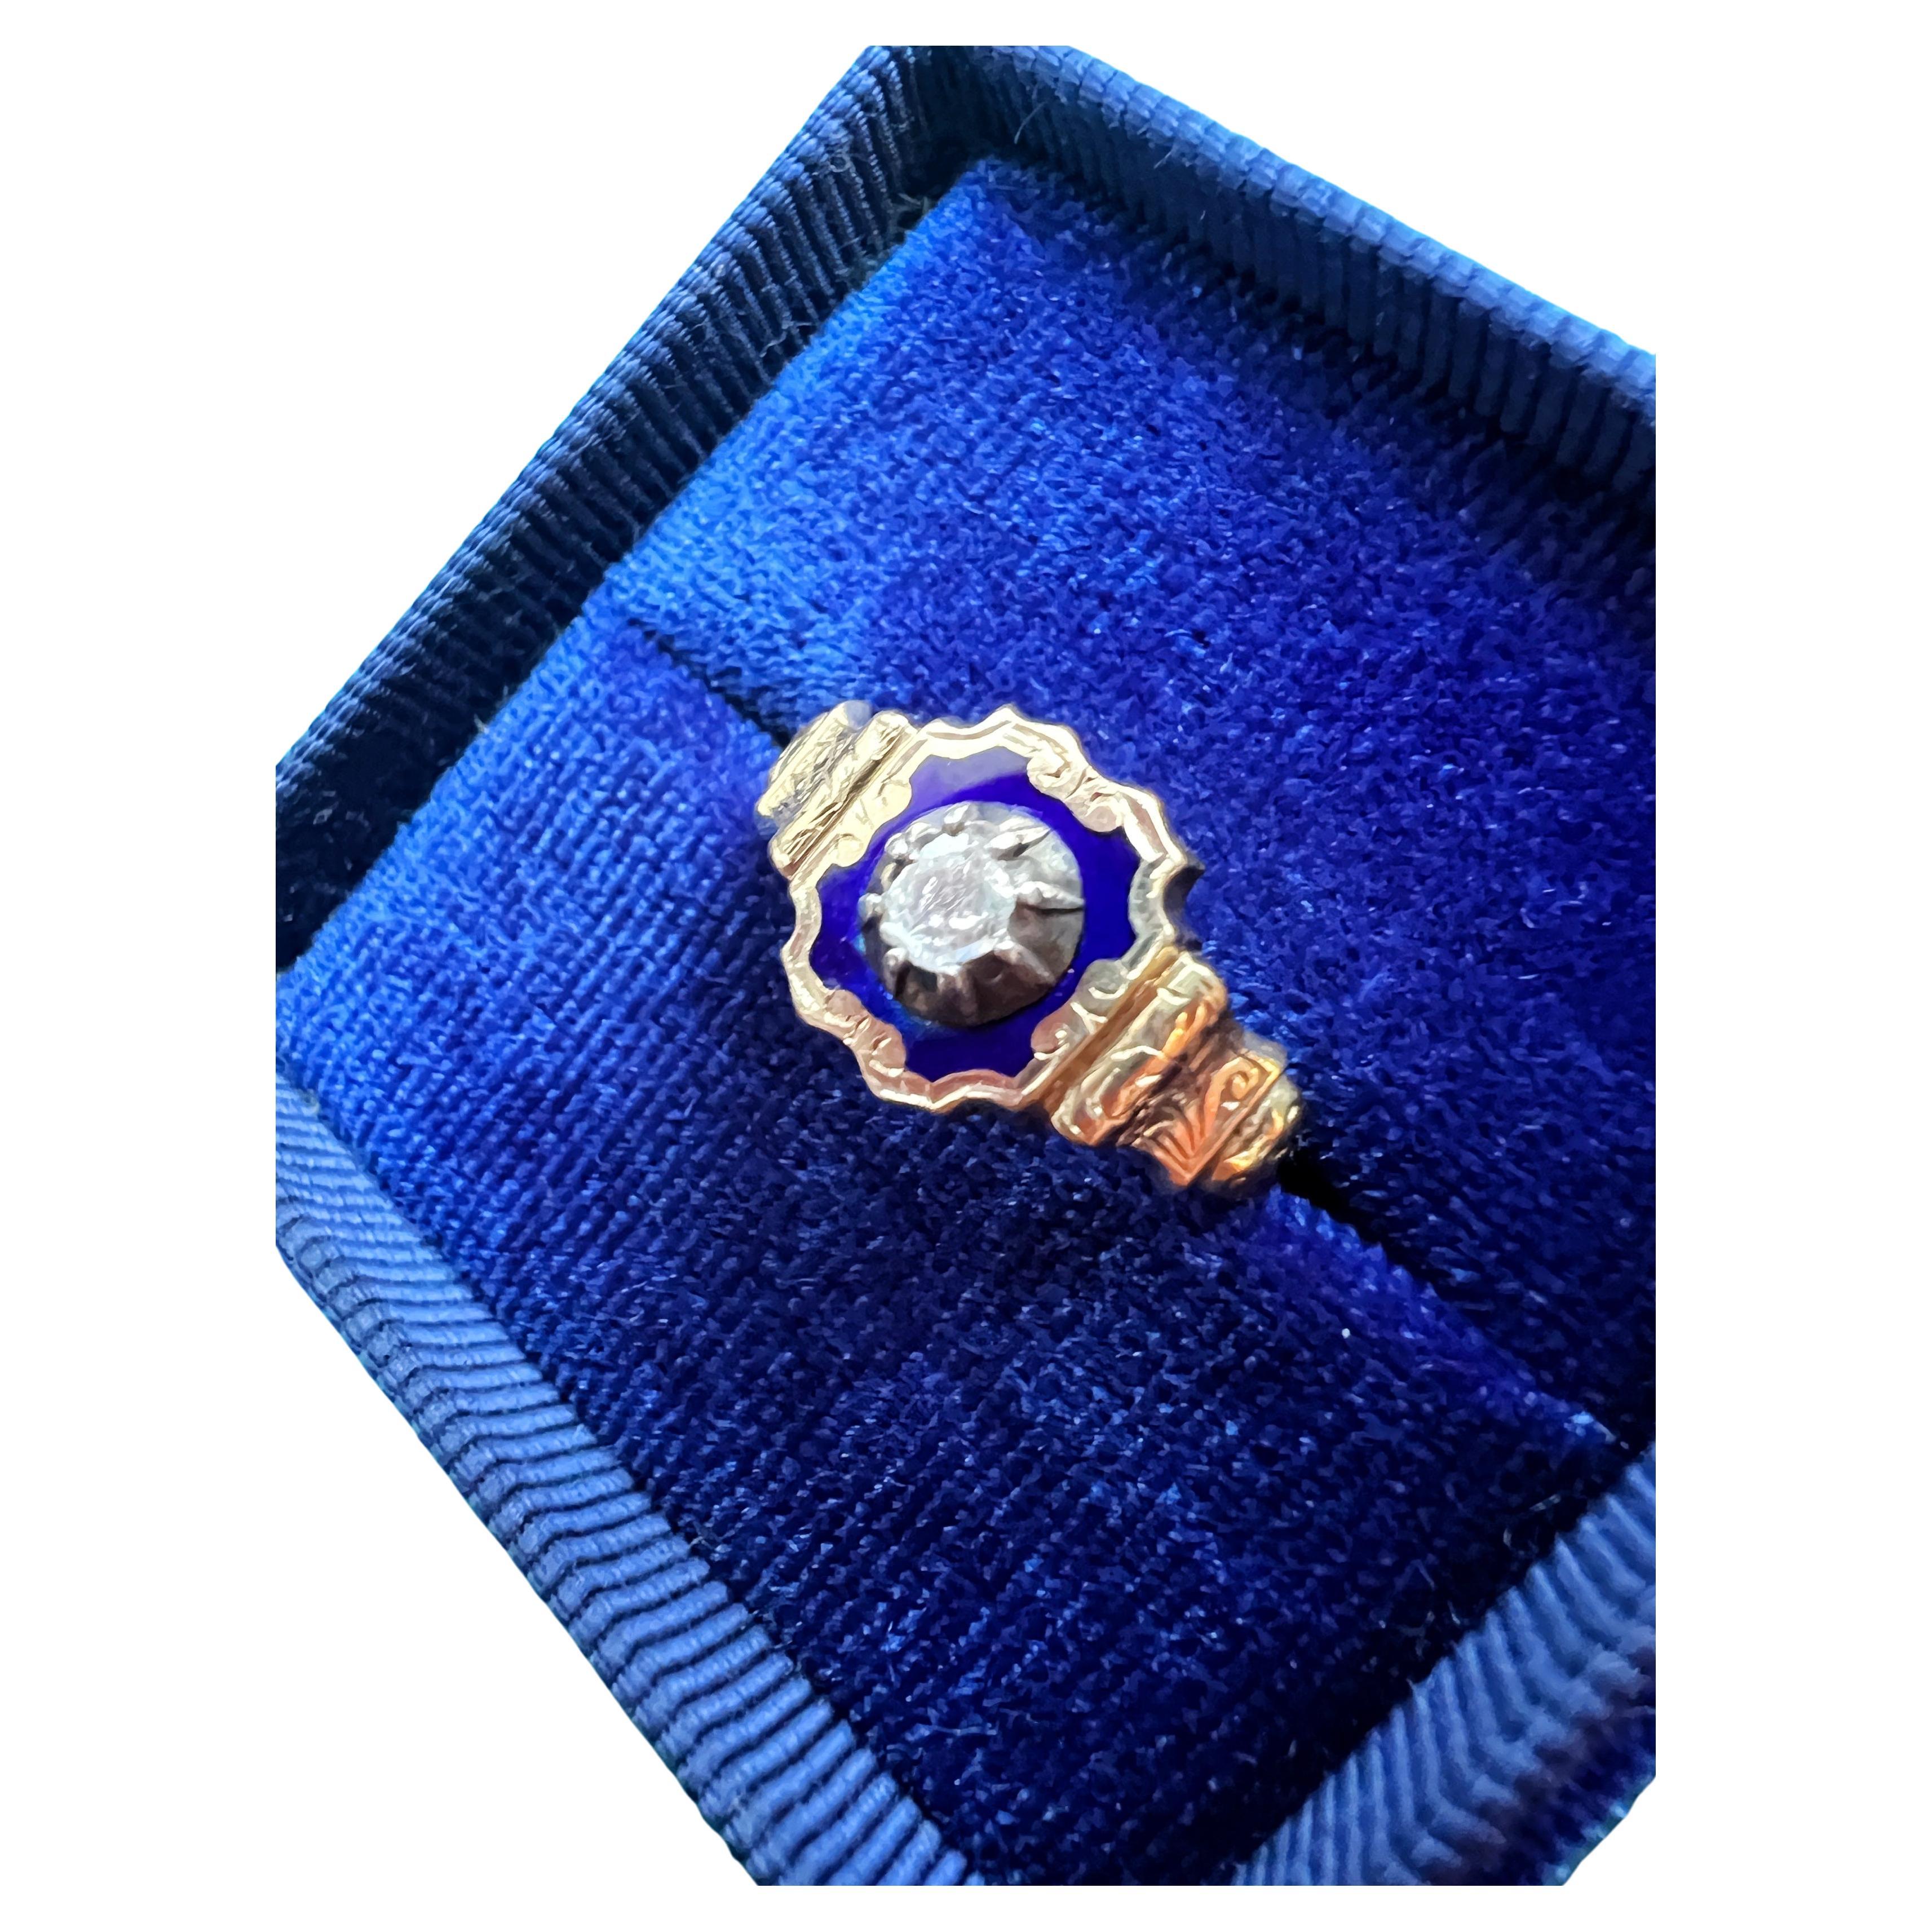 Antique 18k Gold Blue Enamel Diamond Signet Ring